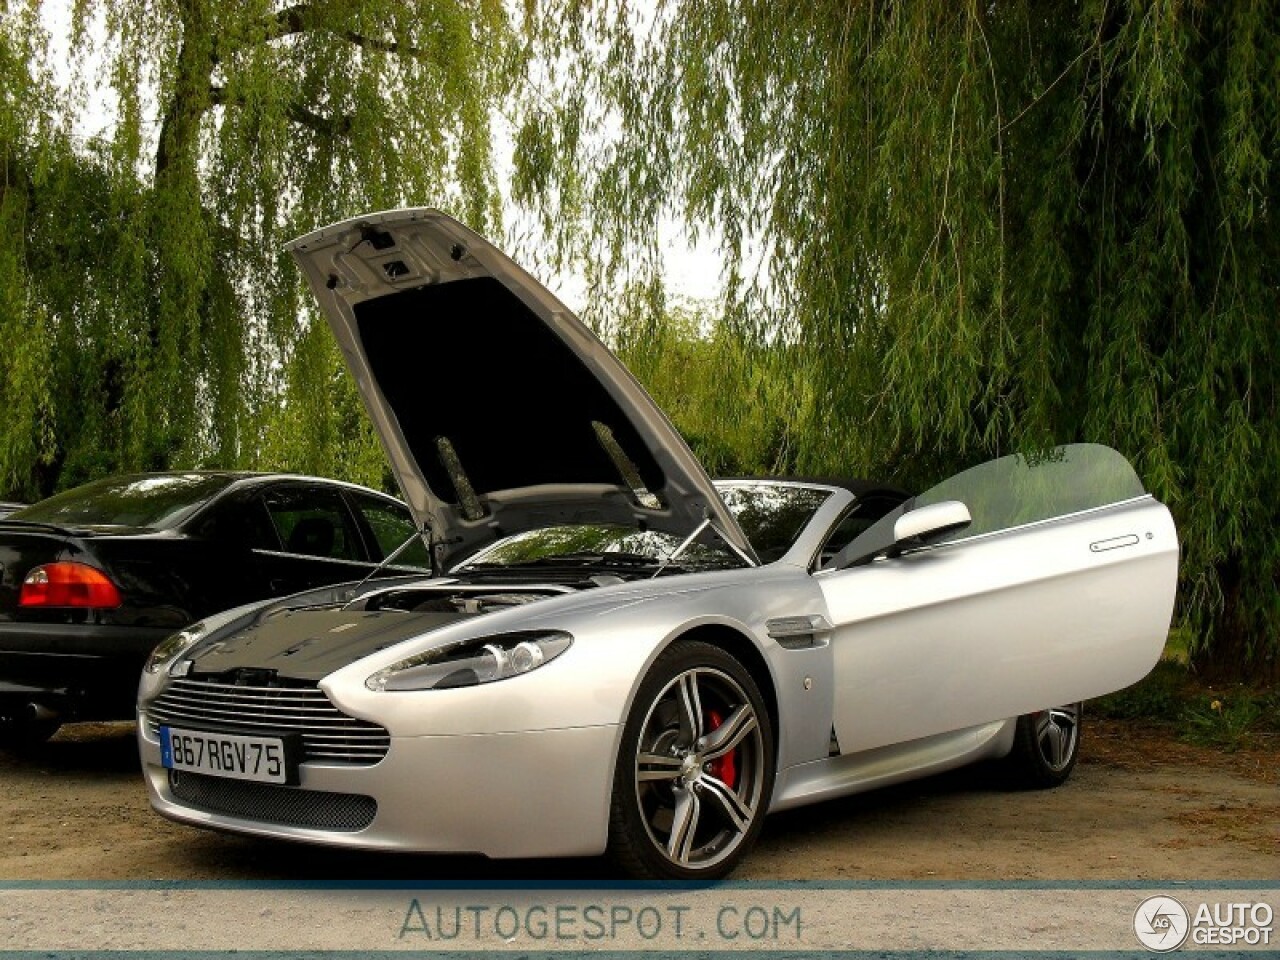 Aston Martin V8 Vantage N400 Roadster